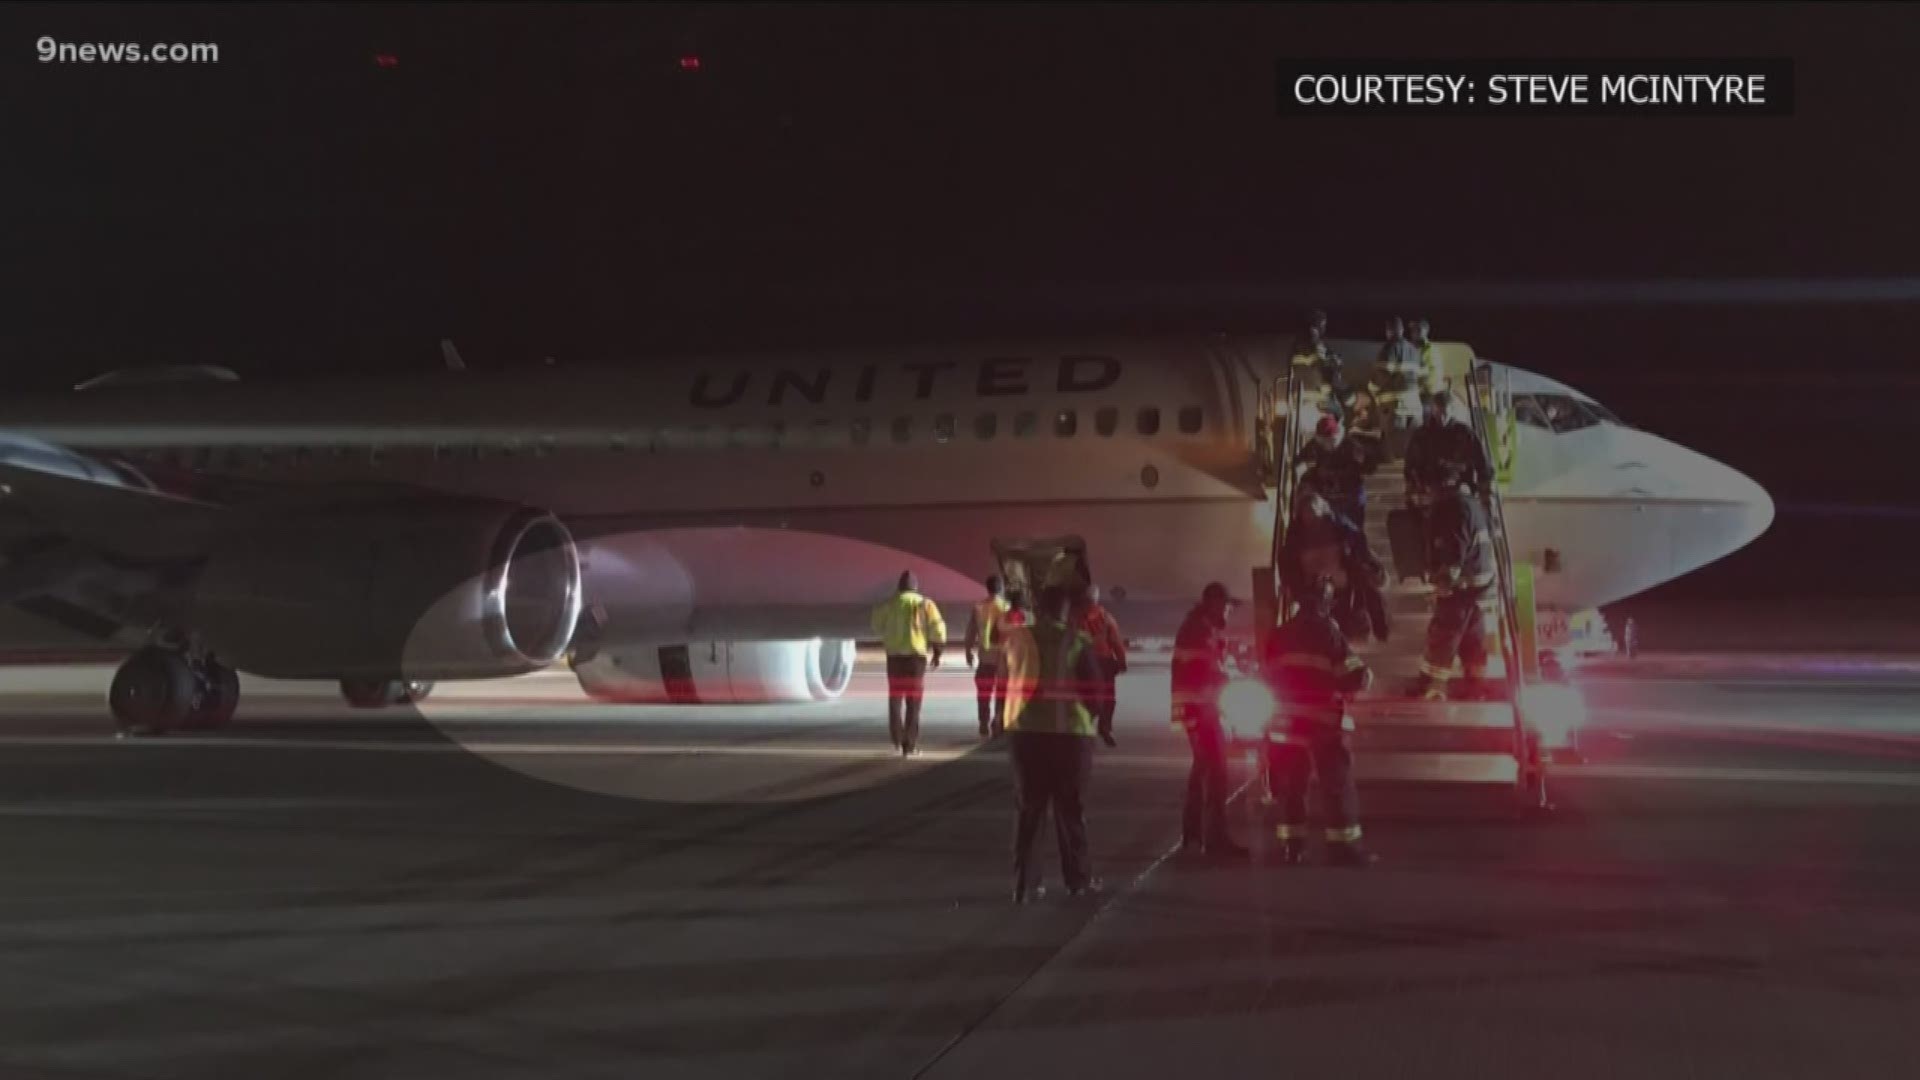 A Denver International Airport spokesperson said no injuries were reported.